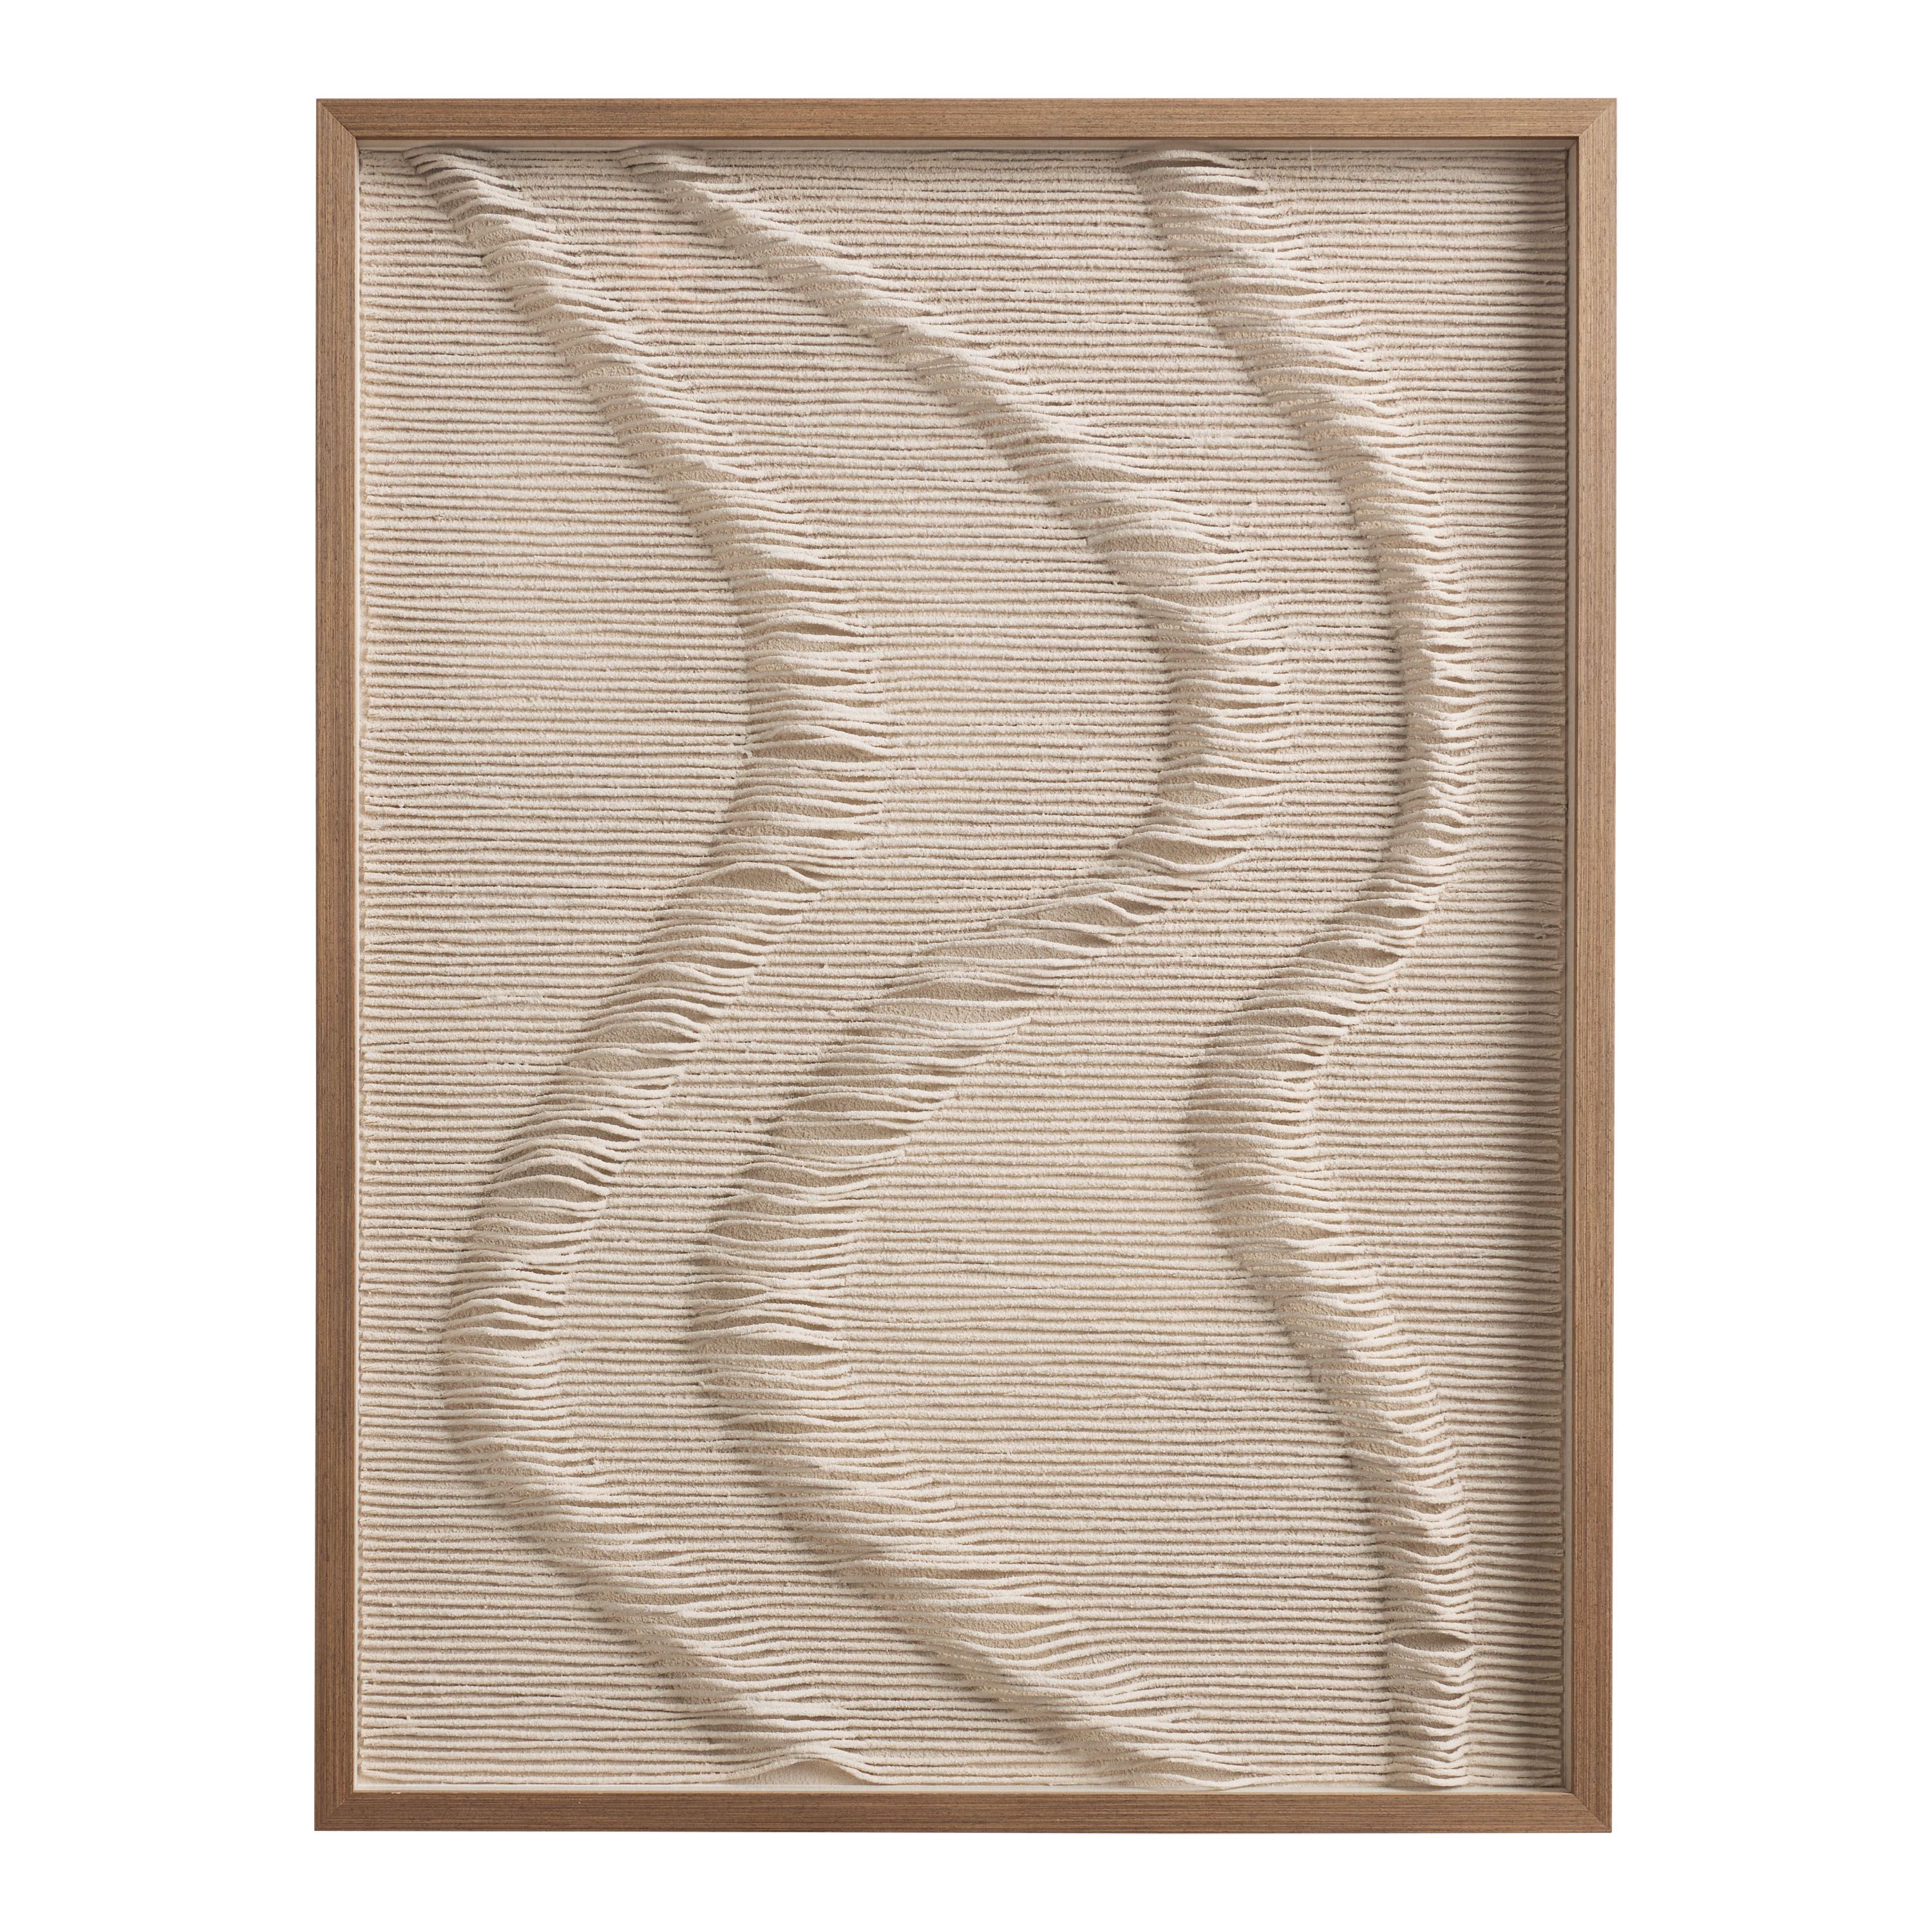 Tan Rice Paper Waves Shadow Box Wall Art | World Market